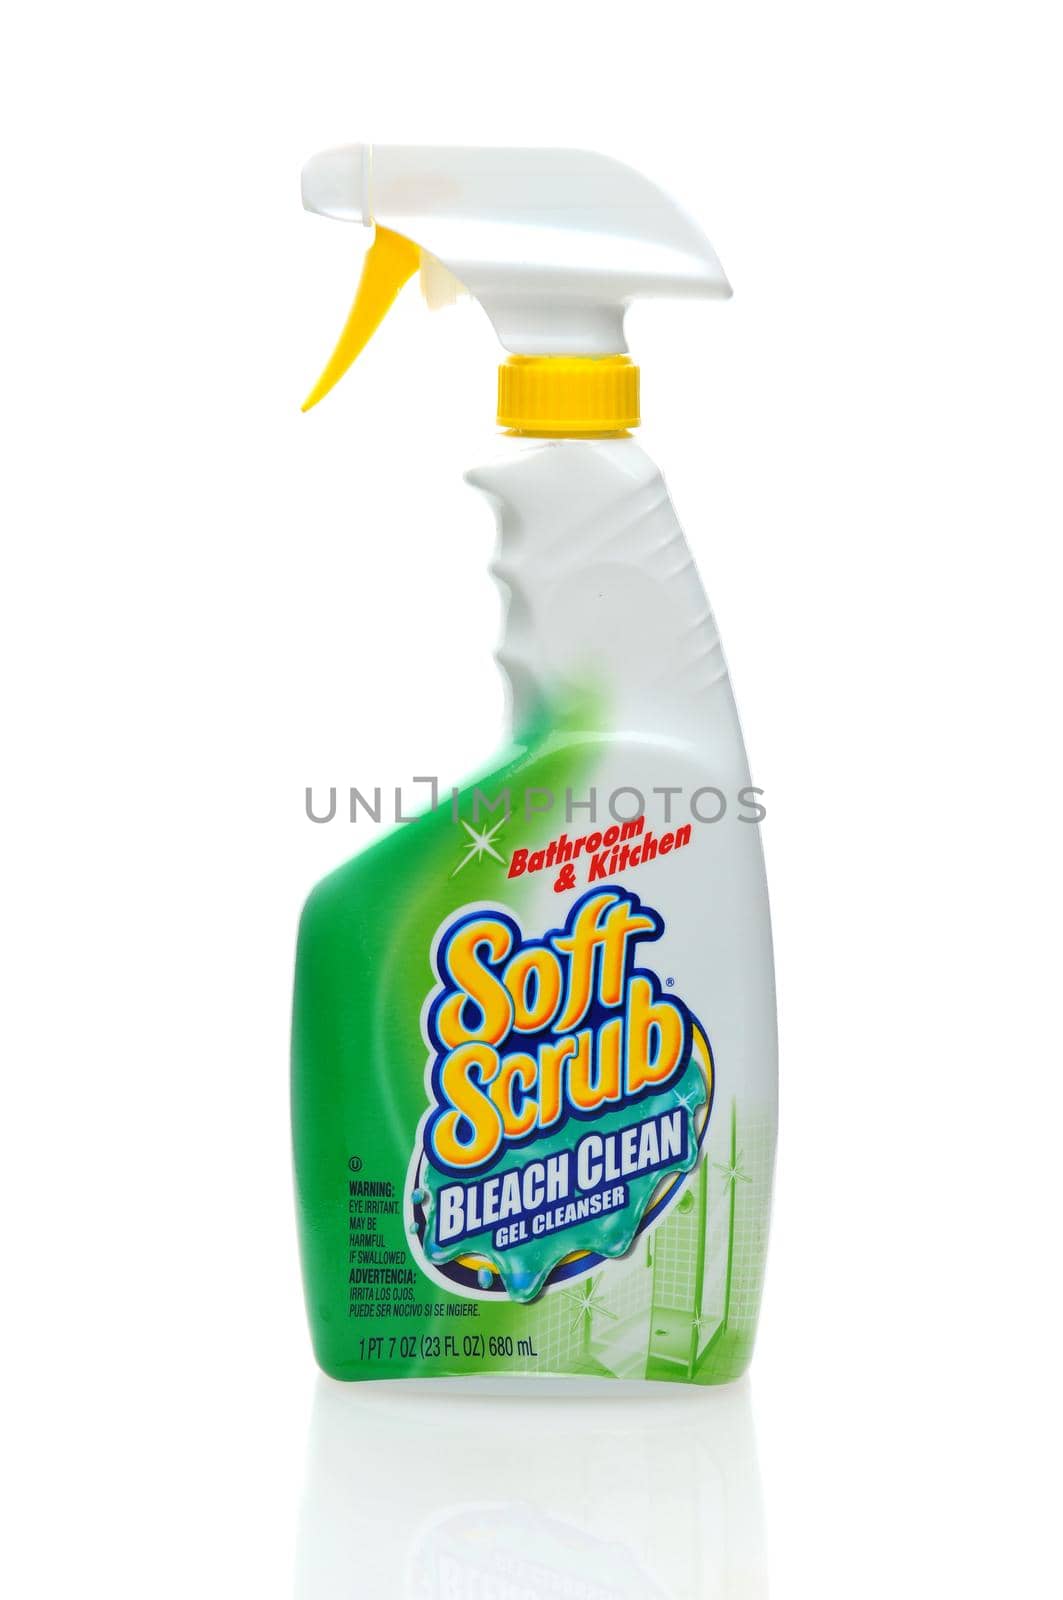 Soft Scrub Bathroom & Kitche Cleanser by sCukrov